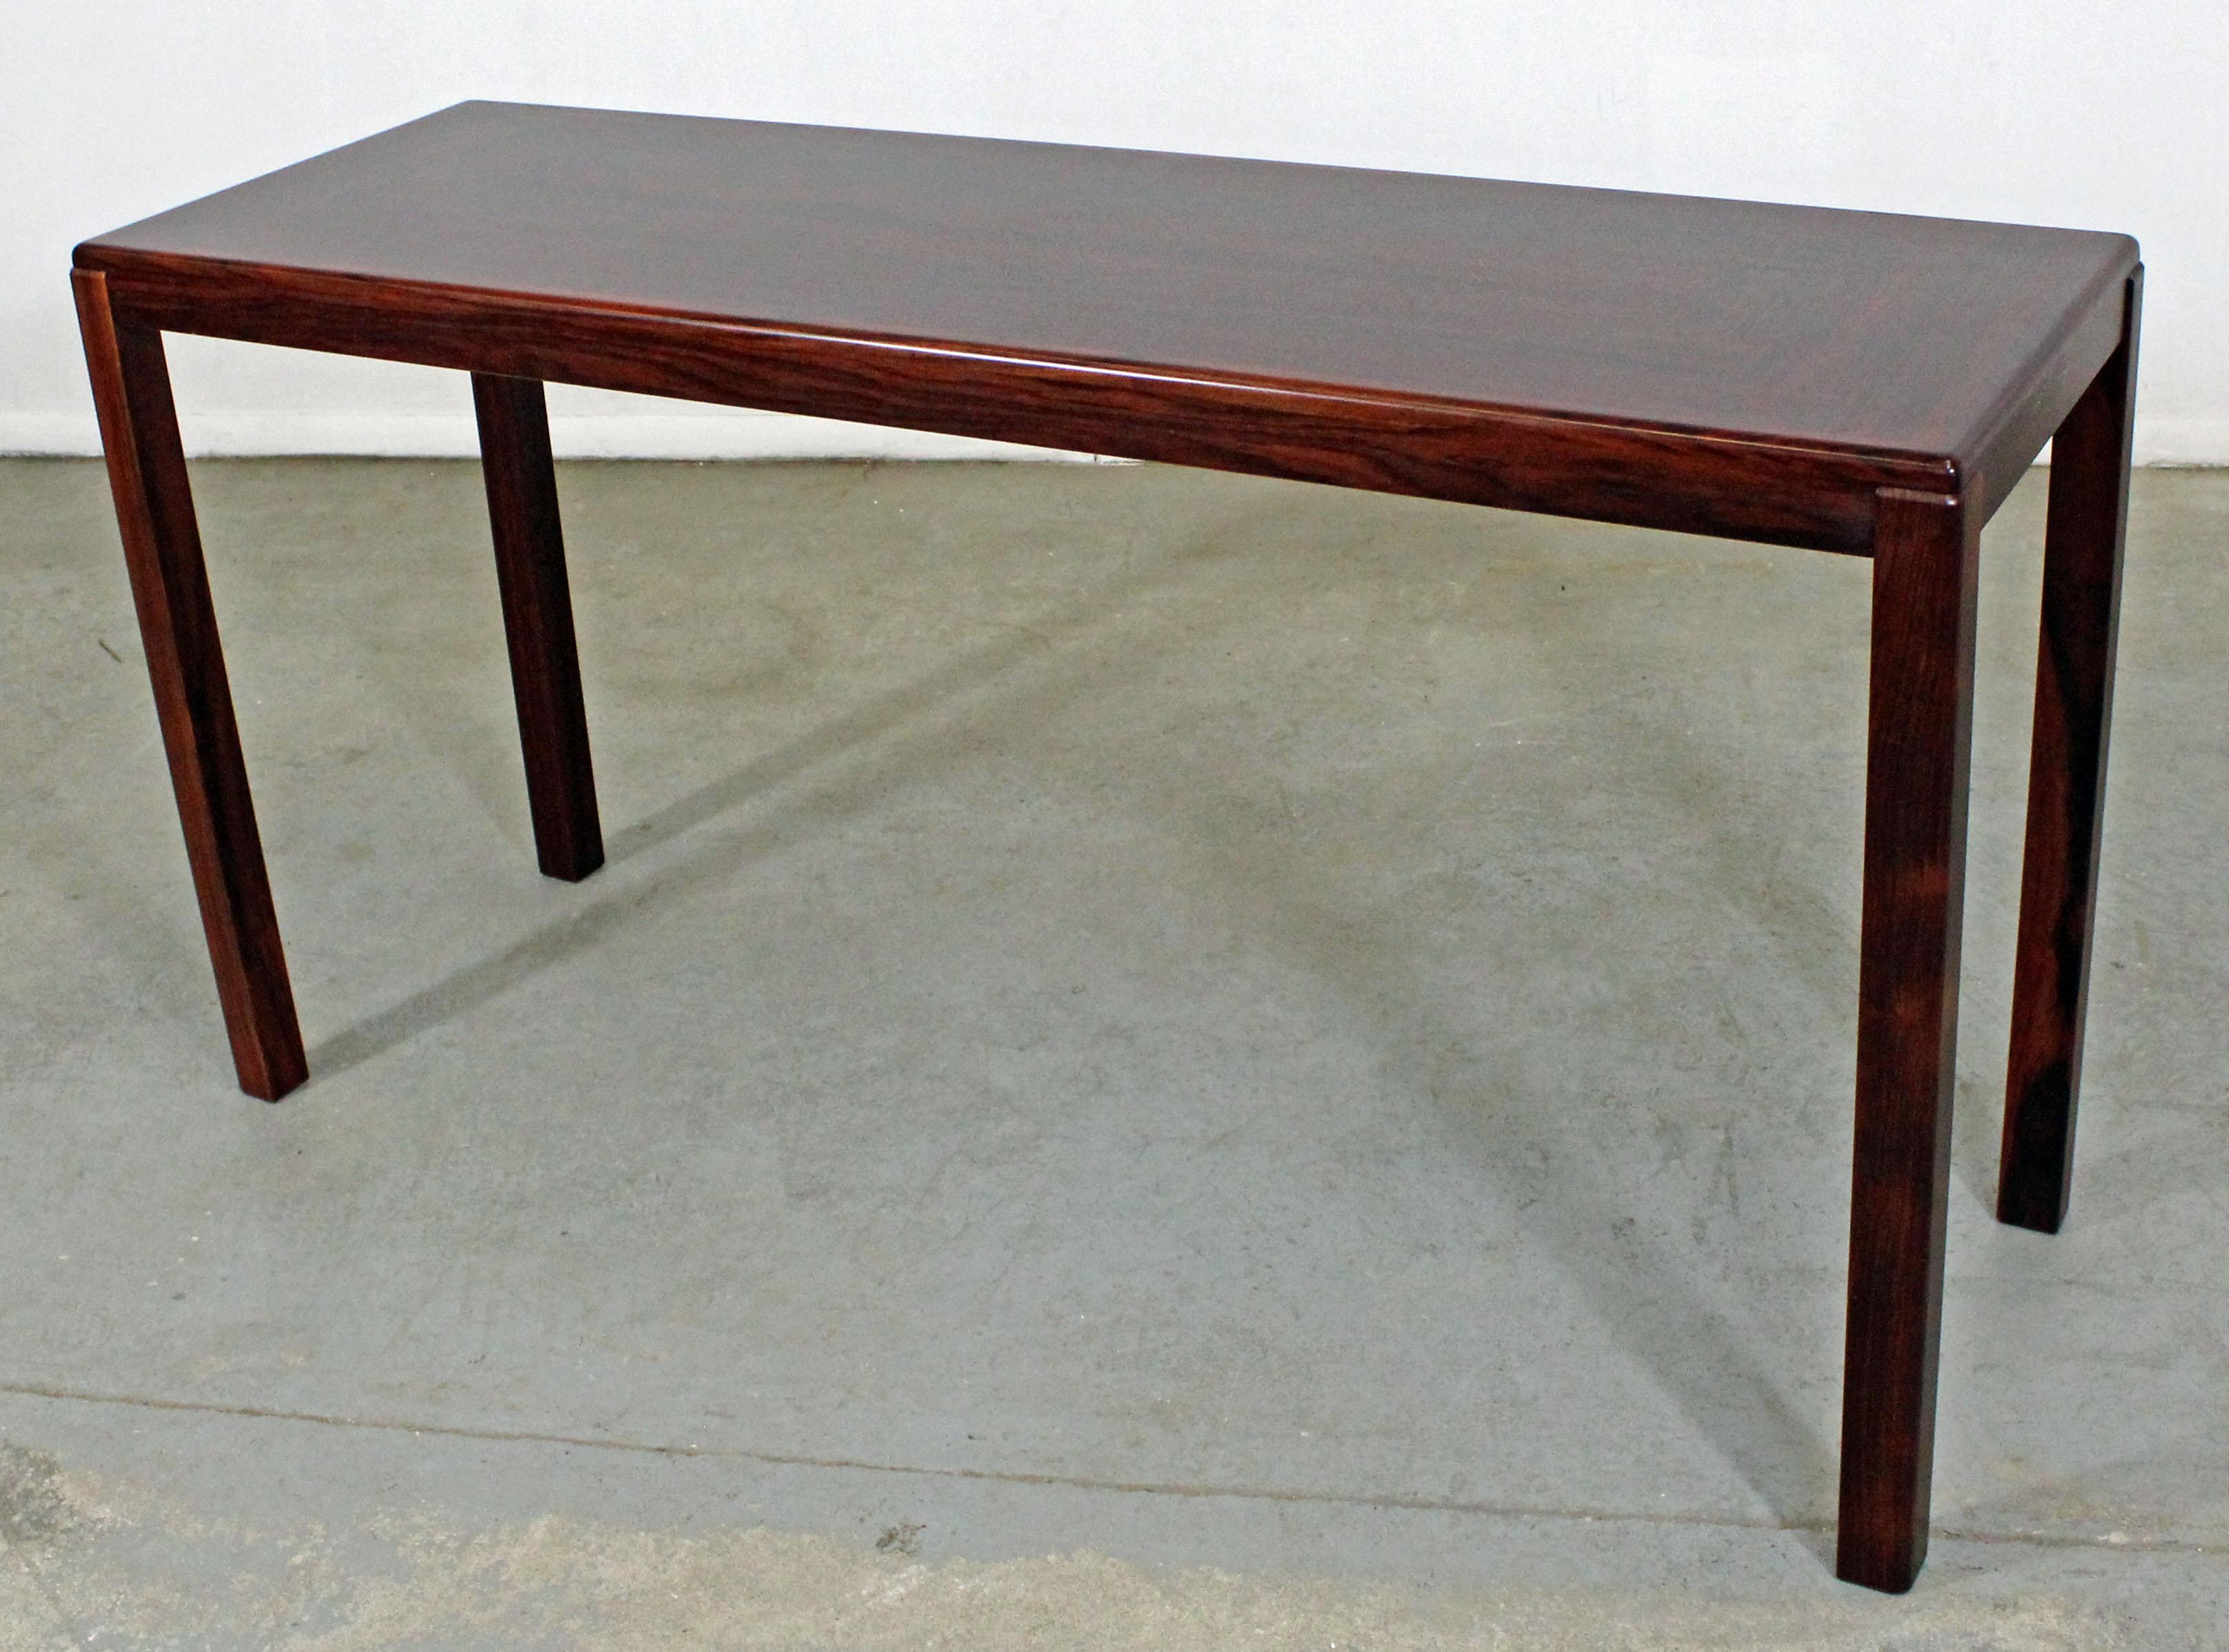 Scandinavian Modern Midcentury Danish Modern Vejle Stole Parquet Top Rosewood Console Table